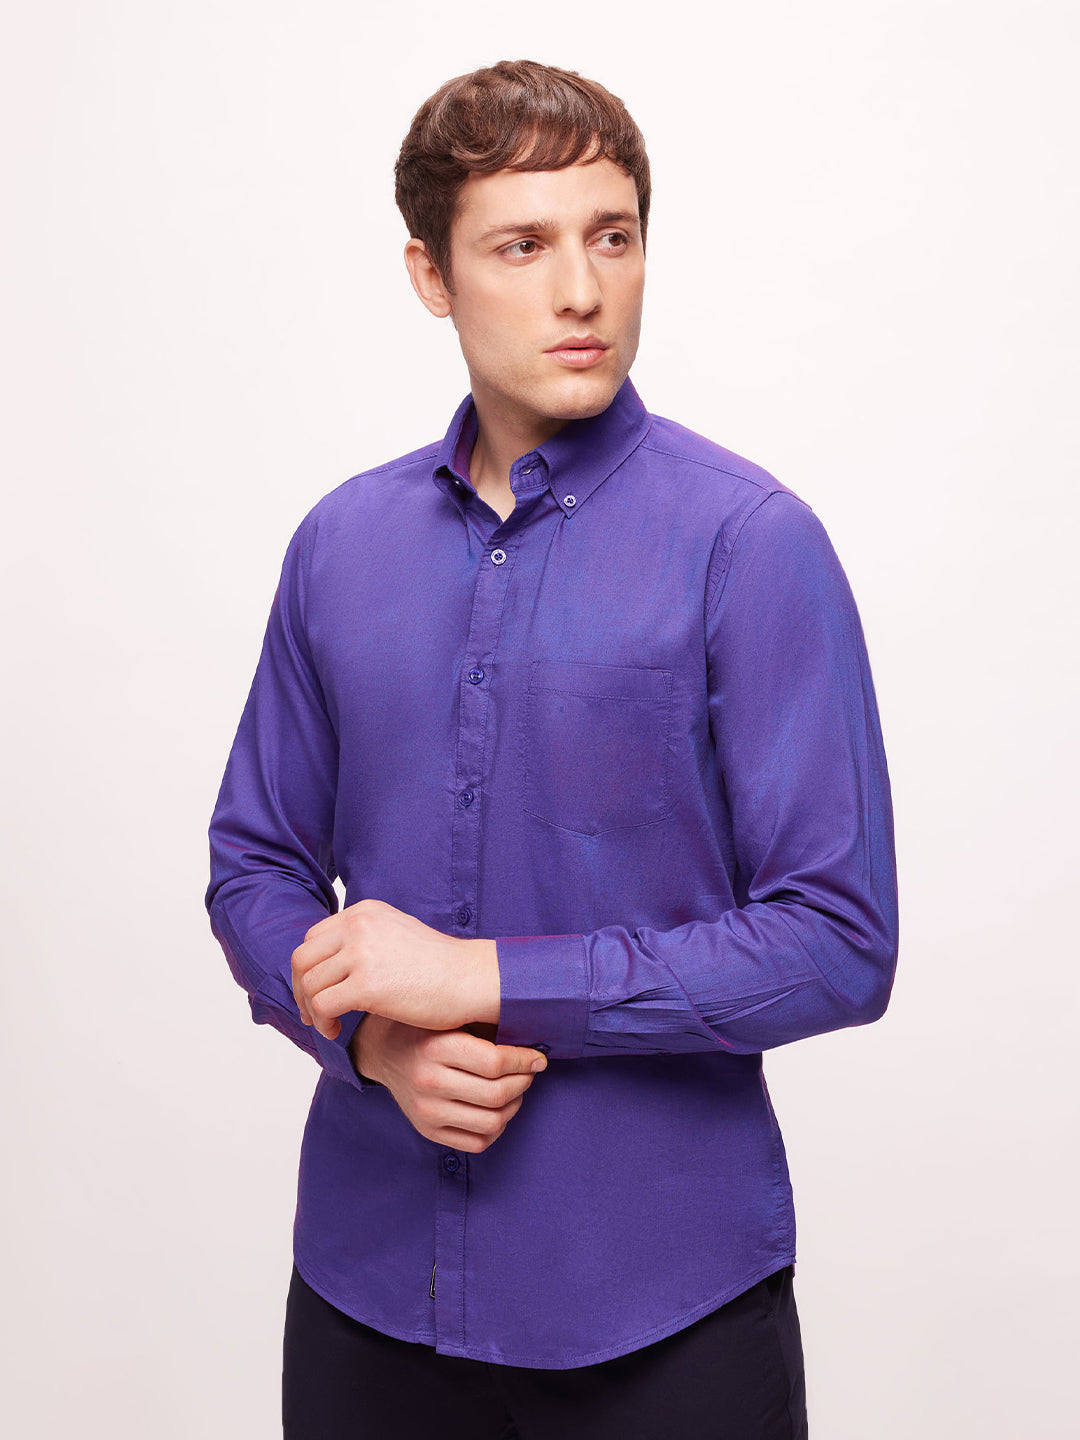 Bombay High Men's Violet Indigo Premium Cotton Solid Shirt